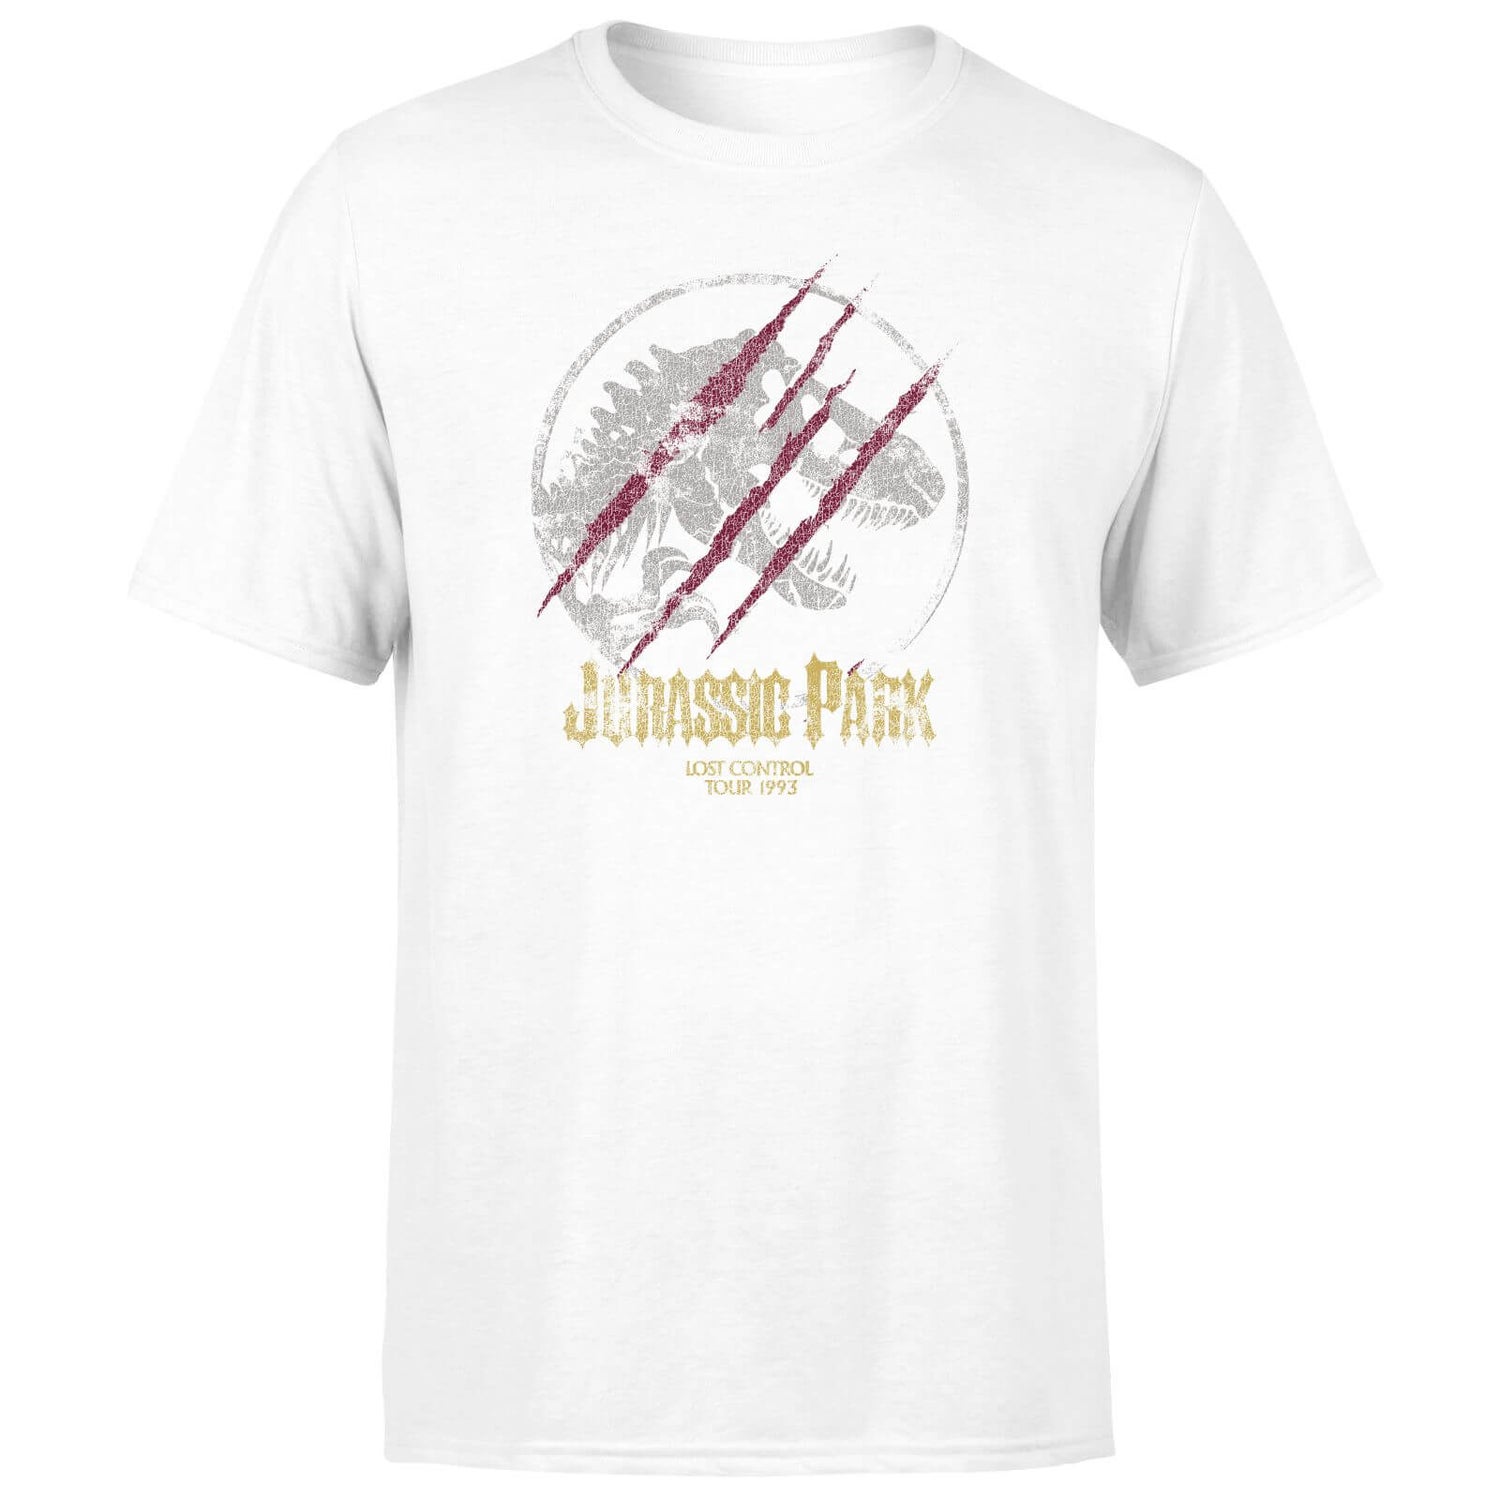 Jurassic Park Lost Control Men's T-Shirt - White